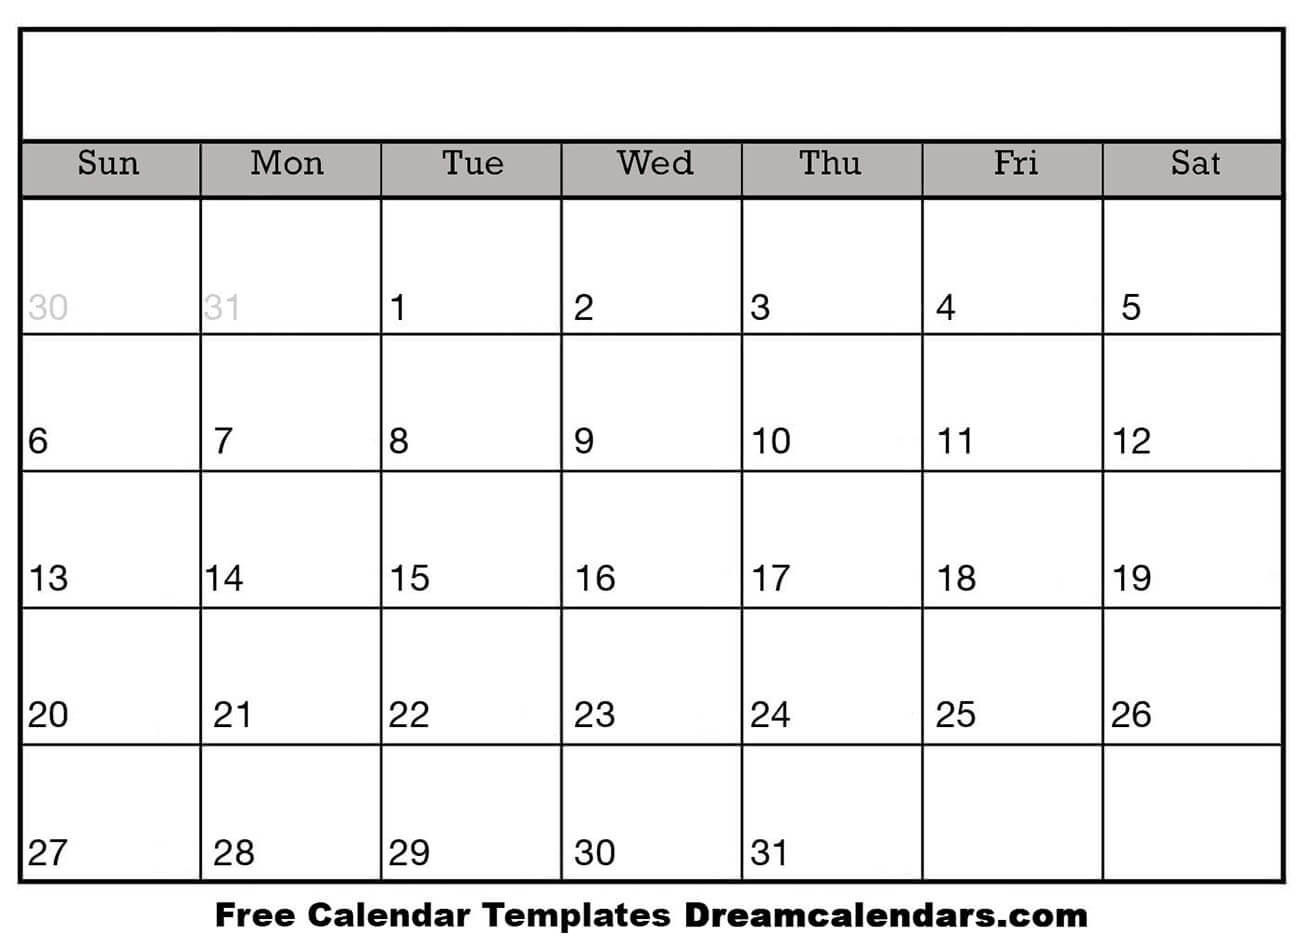 dream-calendars-make-your-calendar-template-blog